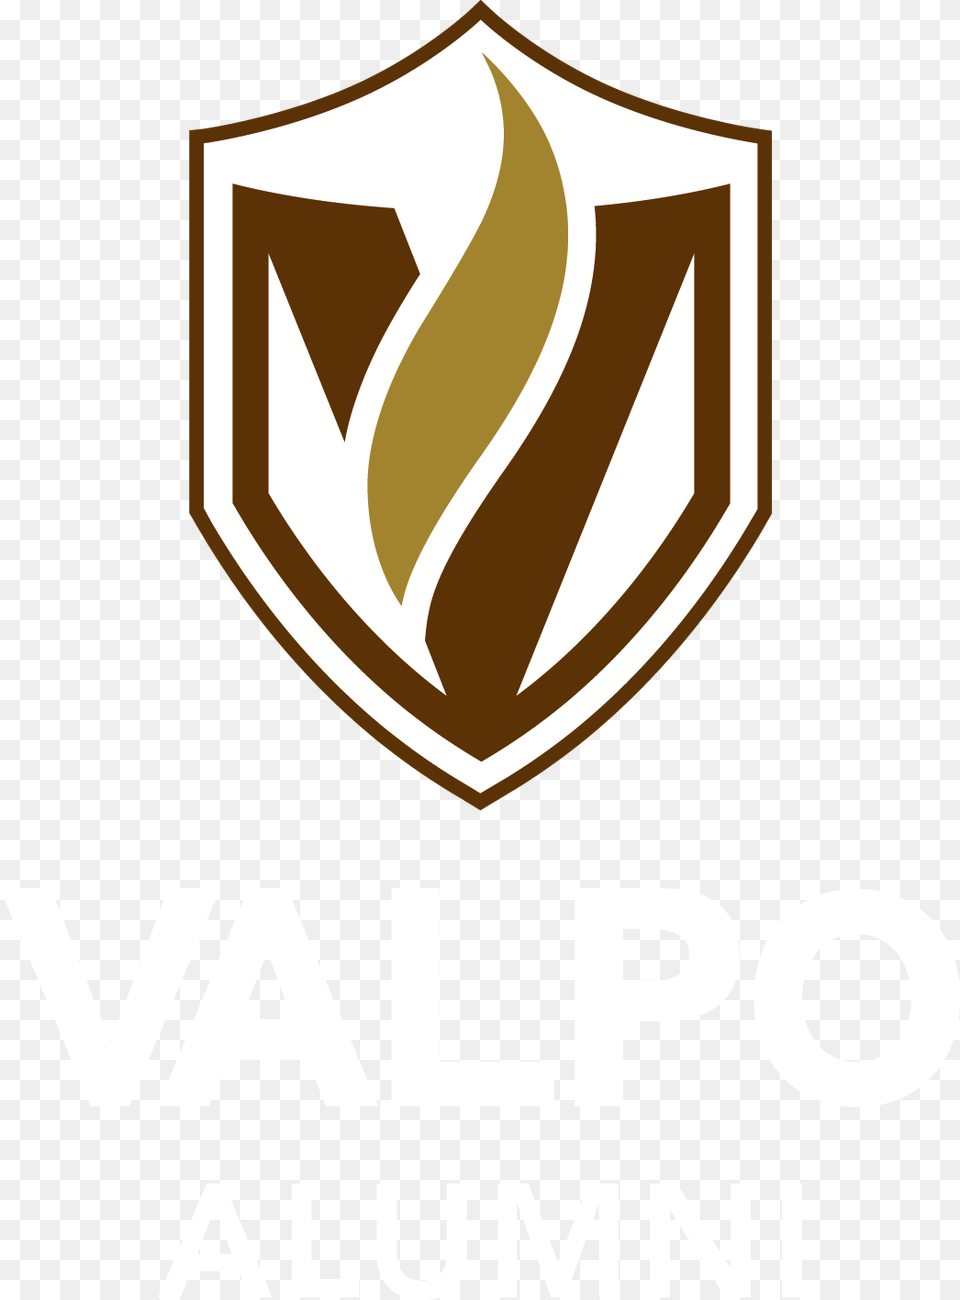 Prestige Reverse Download Valparaiso University Symbol, Armor, Shield Png Image